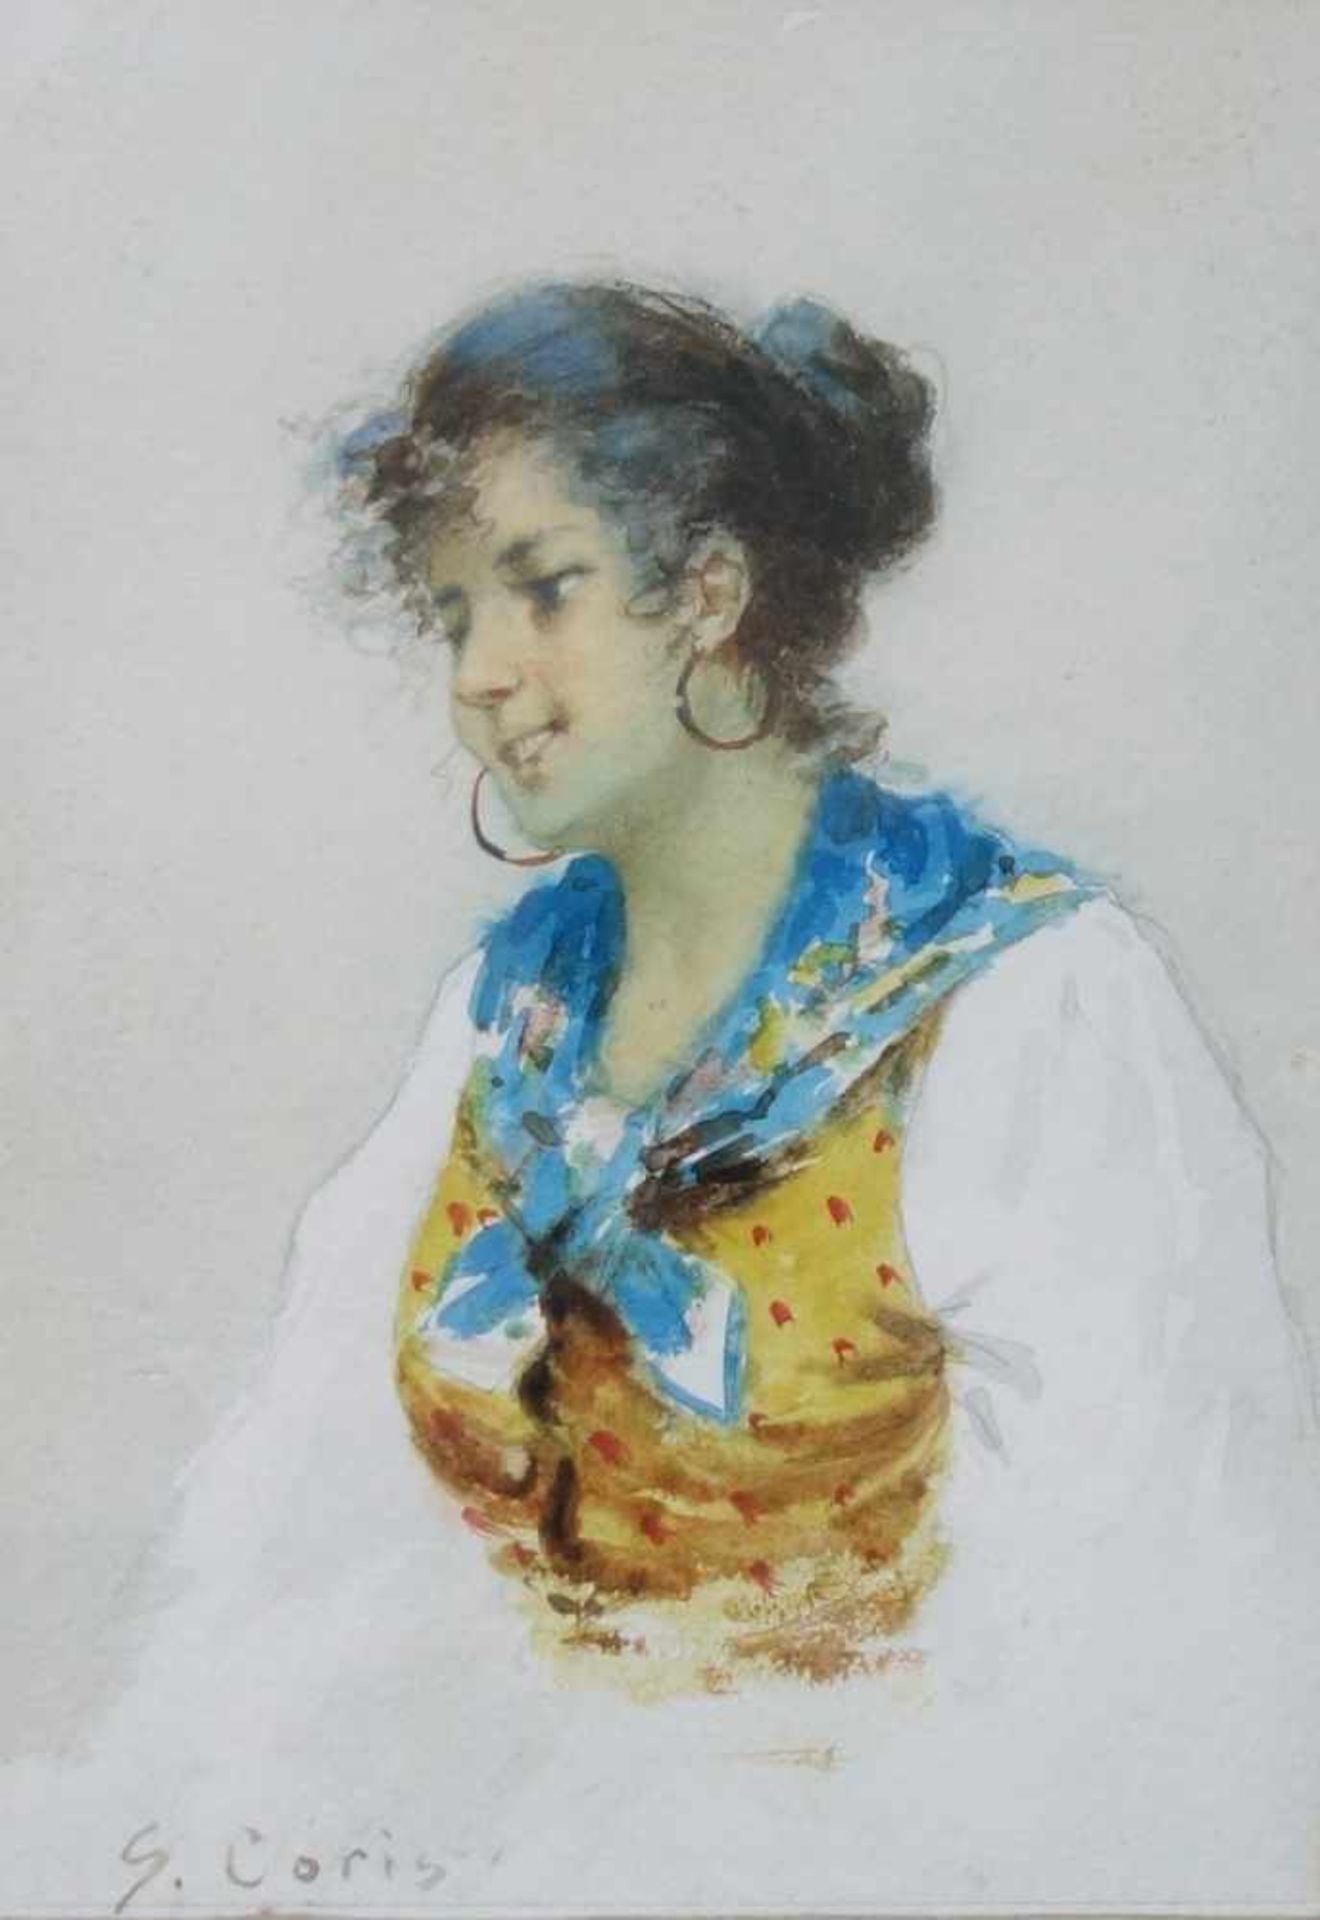 S. Coris (19./ 20. Jahrhundert), "Brustporträt einer jungen Italienerin", Aquarell/ Karton, unten